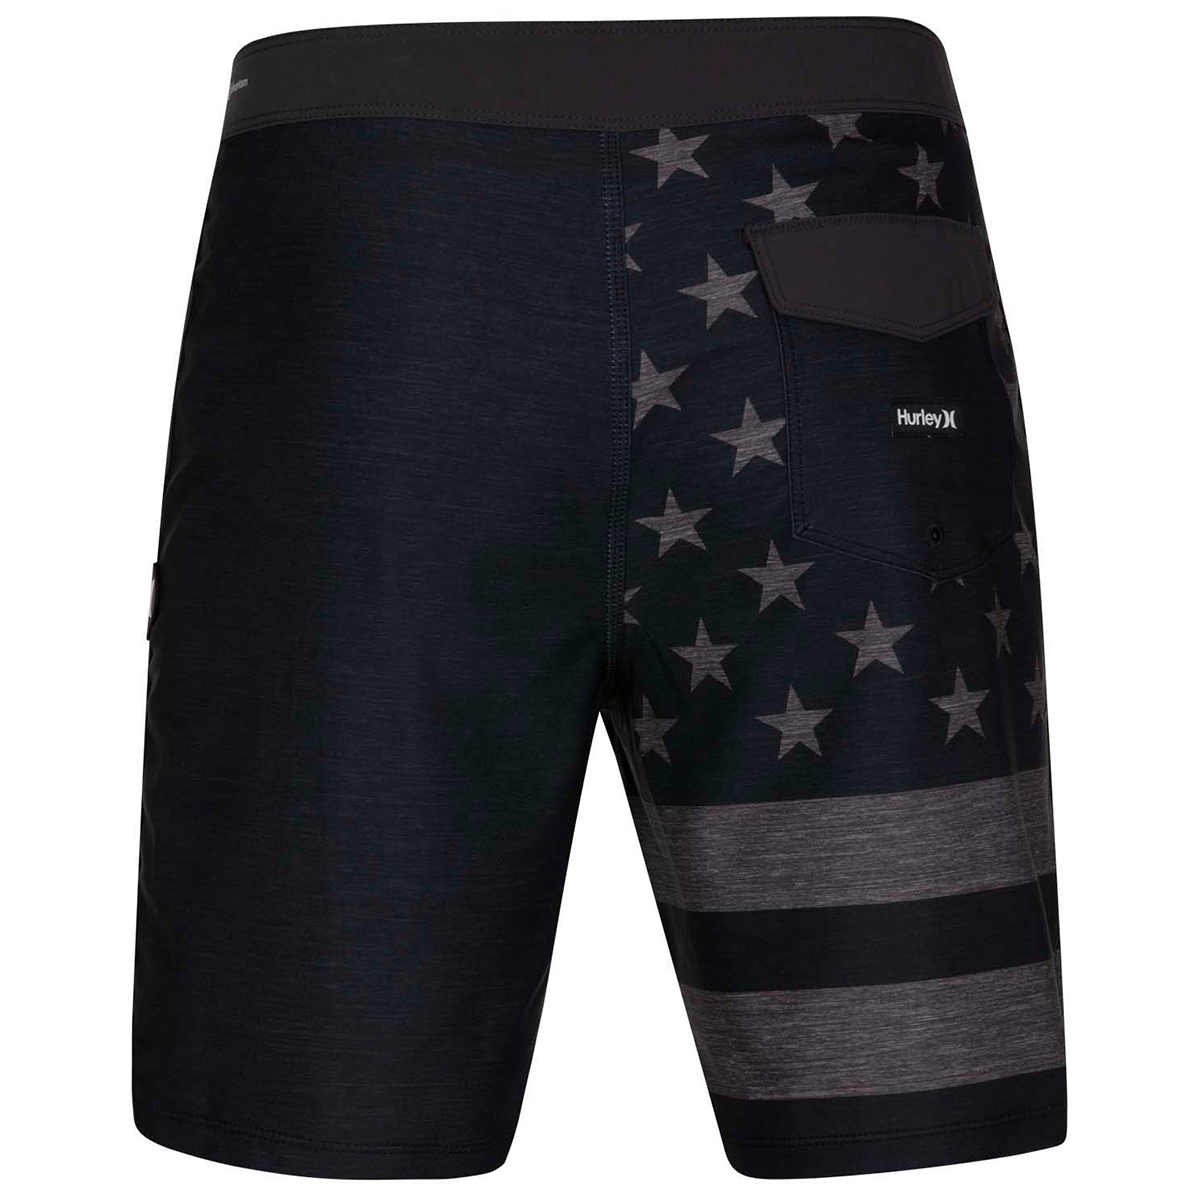 Phantom Patriot Boardshorts 20, Hurley Flag Board Shorts